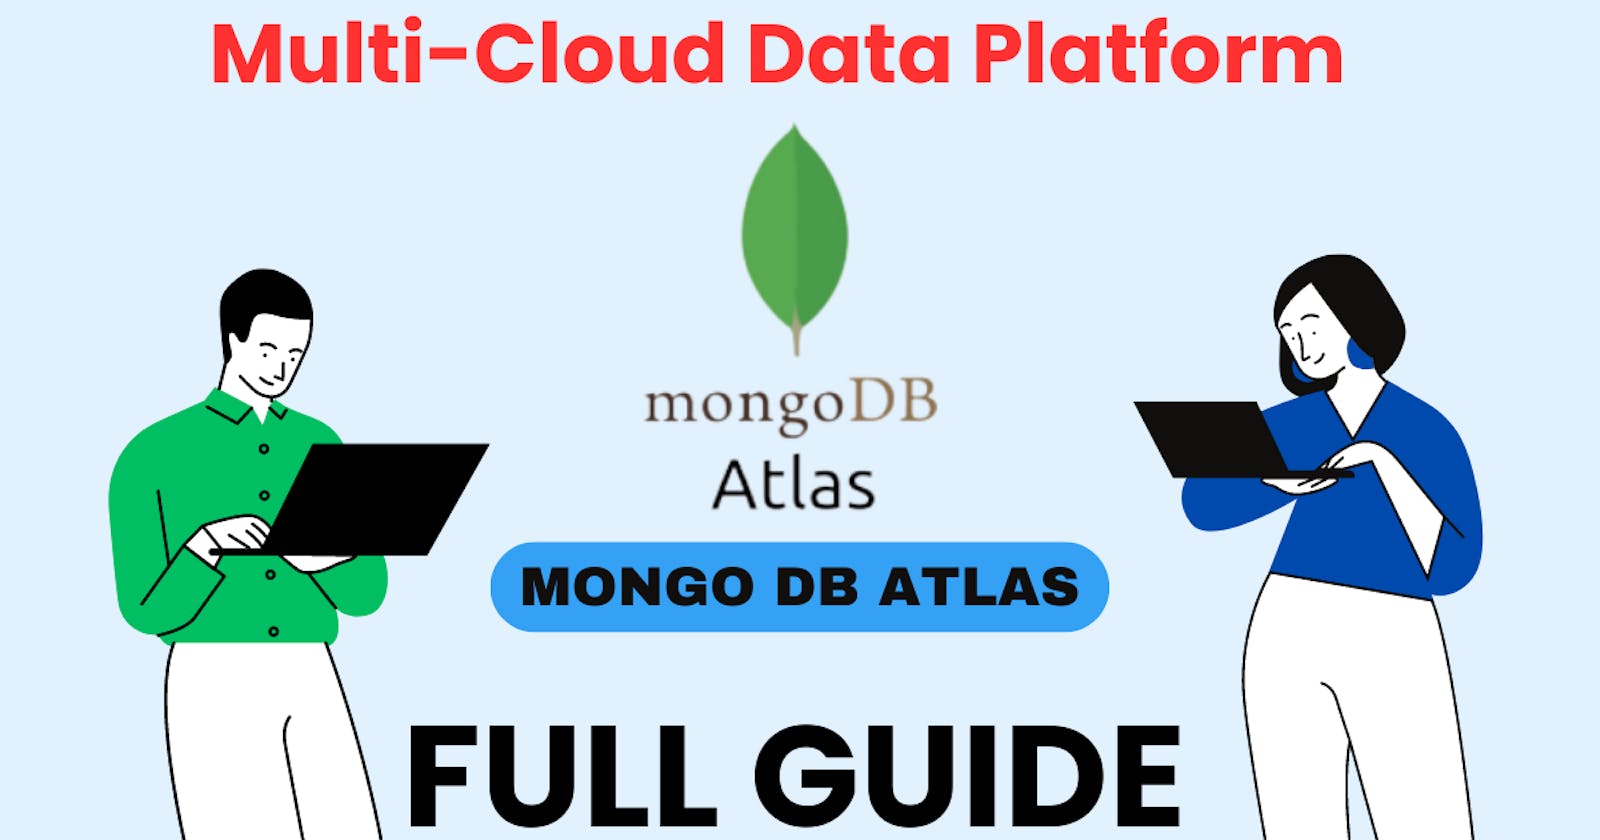 MongoDB Atlas: The Multi-Cloud Developer Data Platform